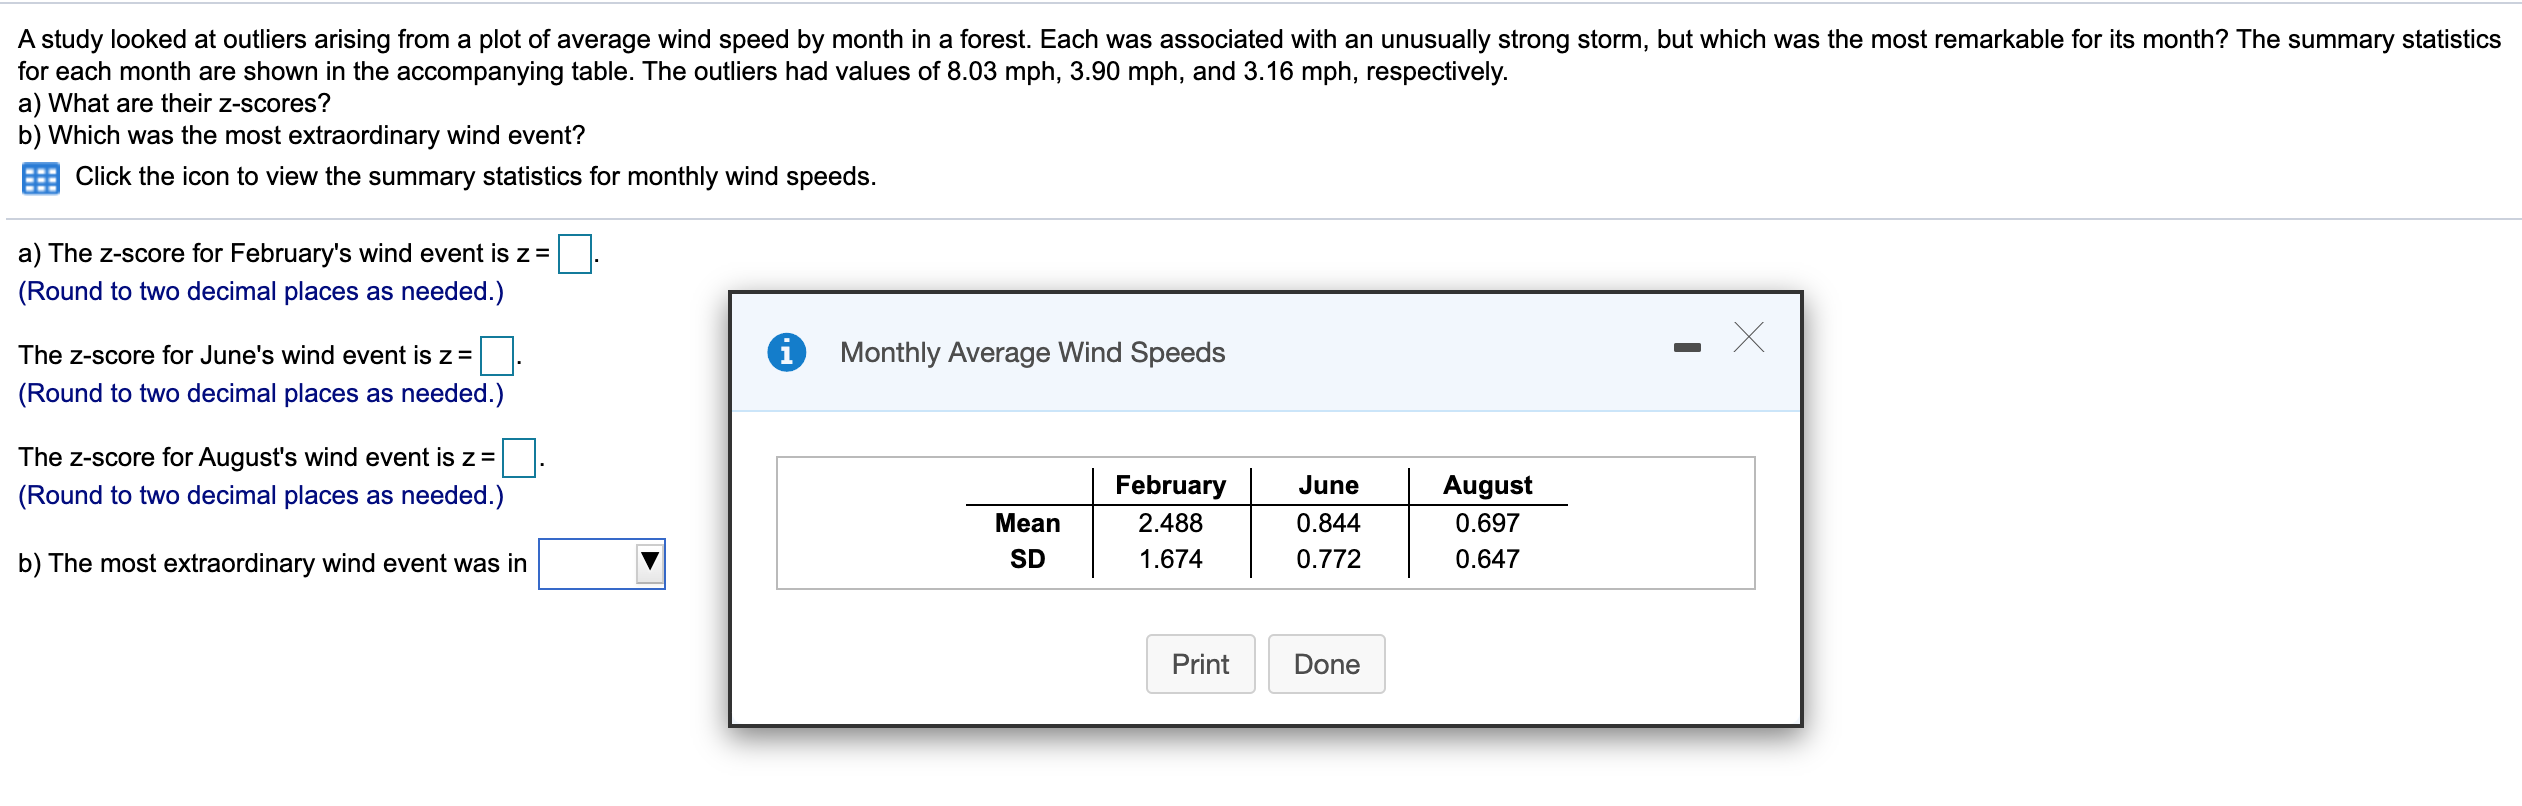 Average Wind Speed by Month